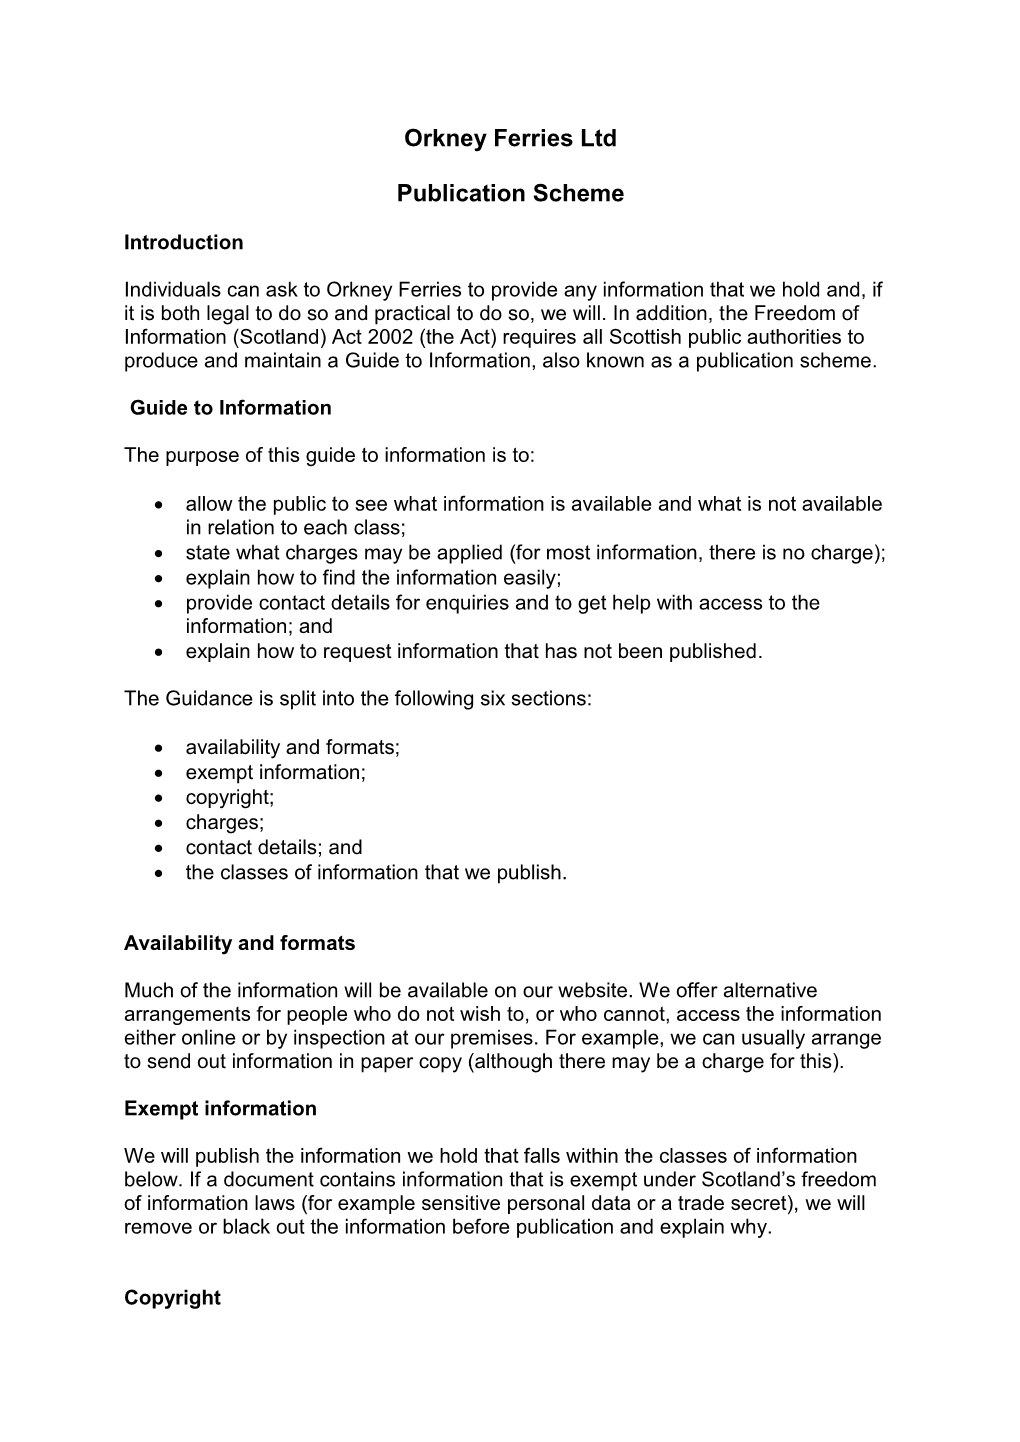 Orkney Ferries Ltd Publication Scheme